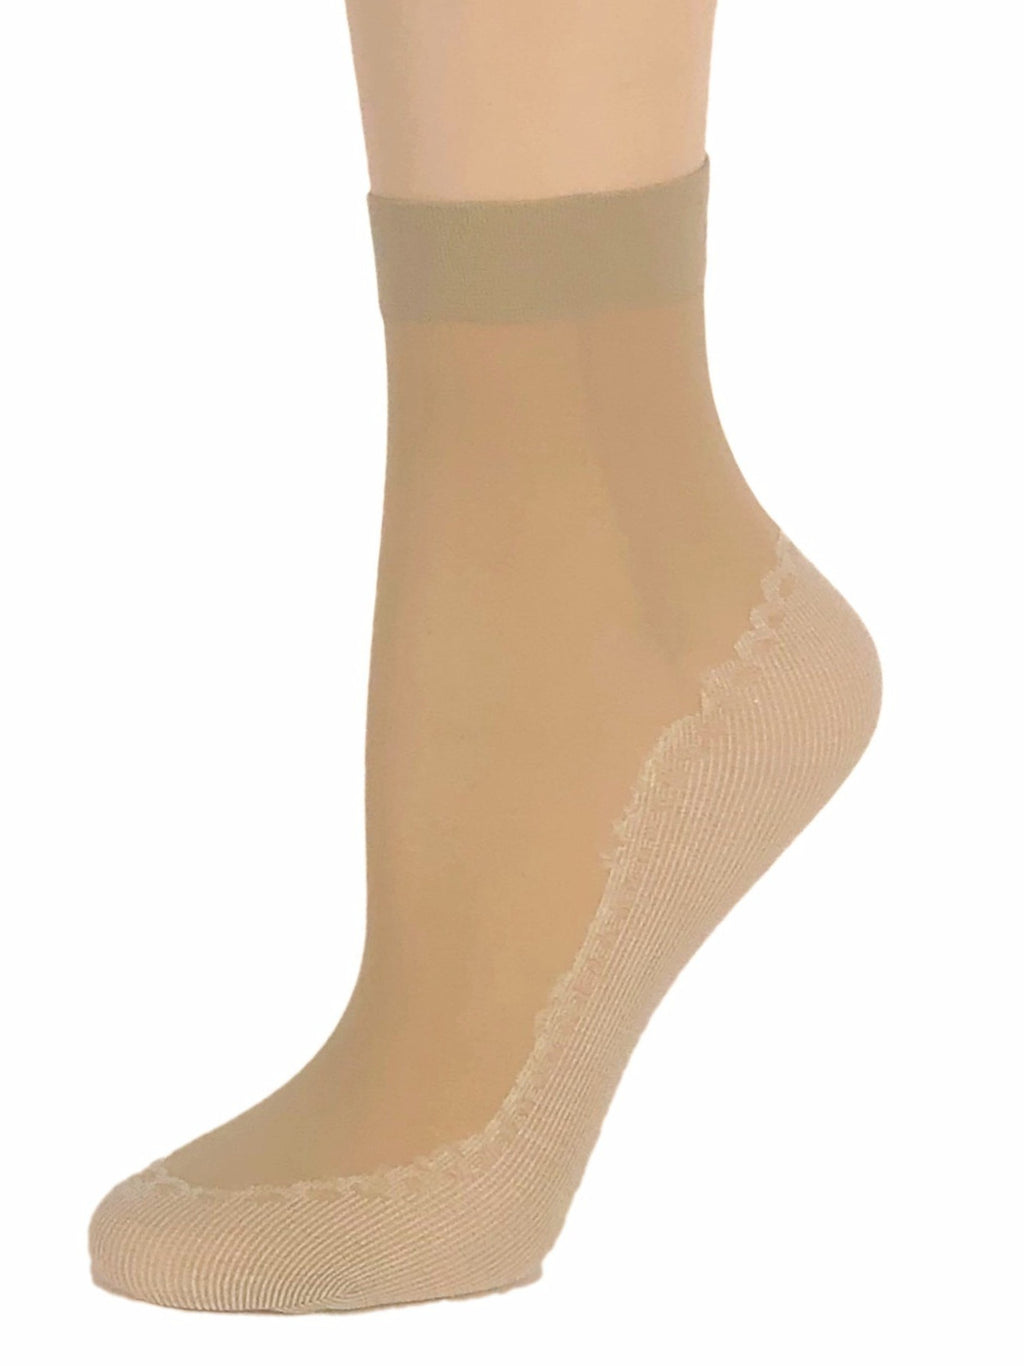 Classy Biege Sheer Socks - Global Trendz Fashion®